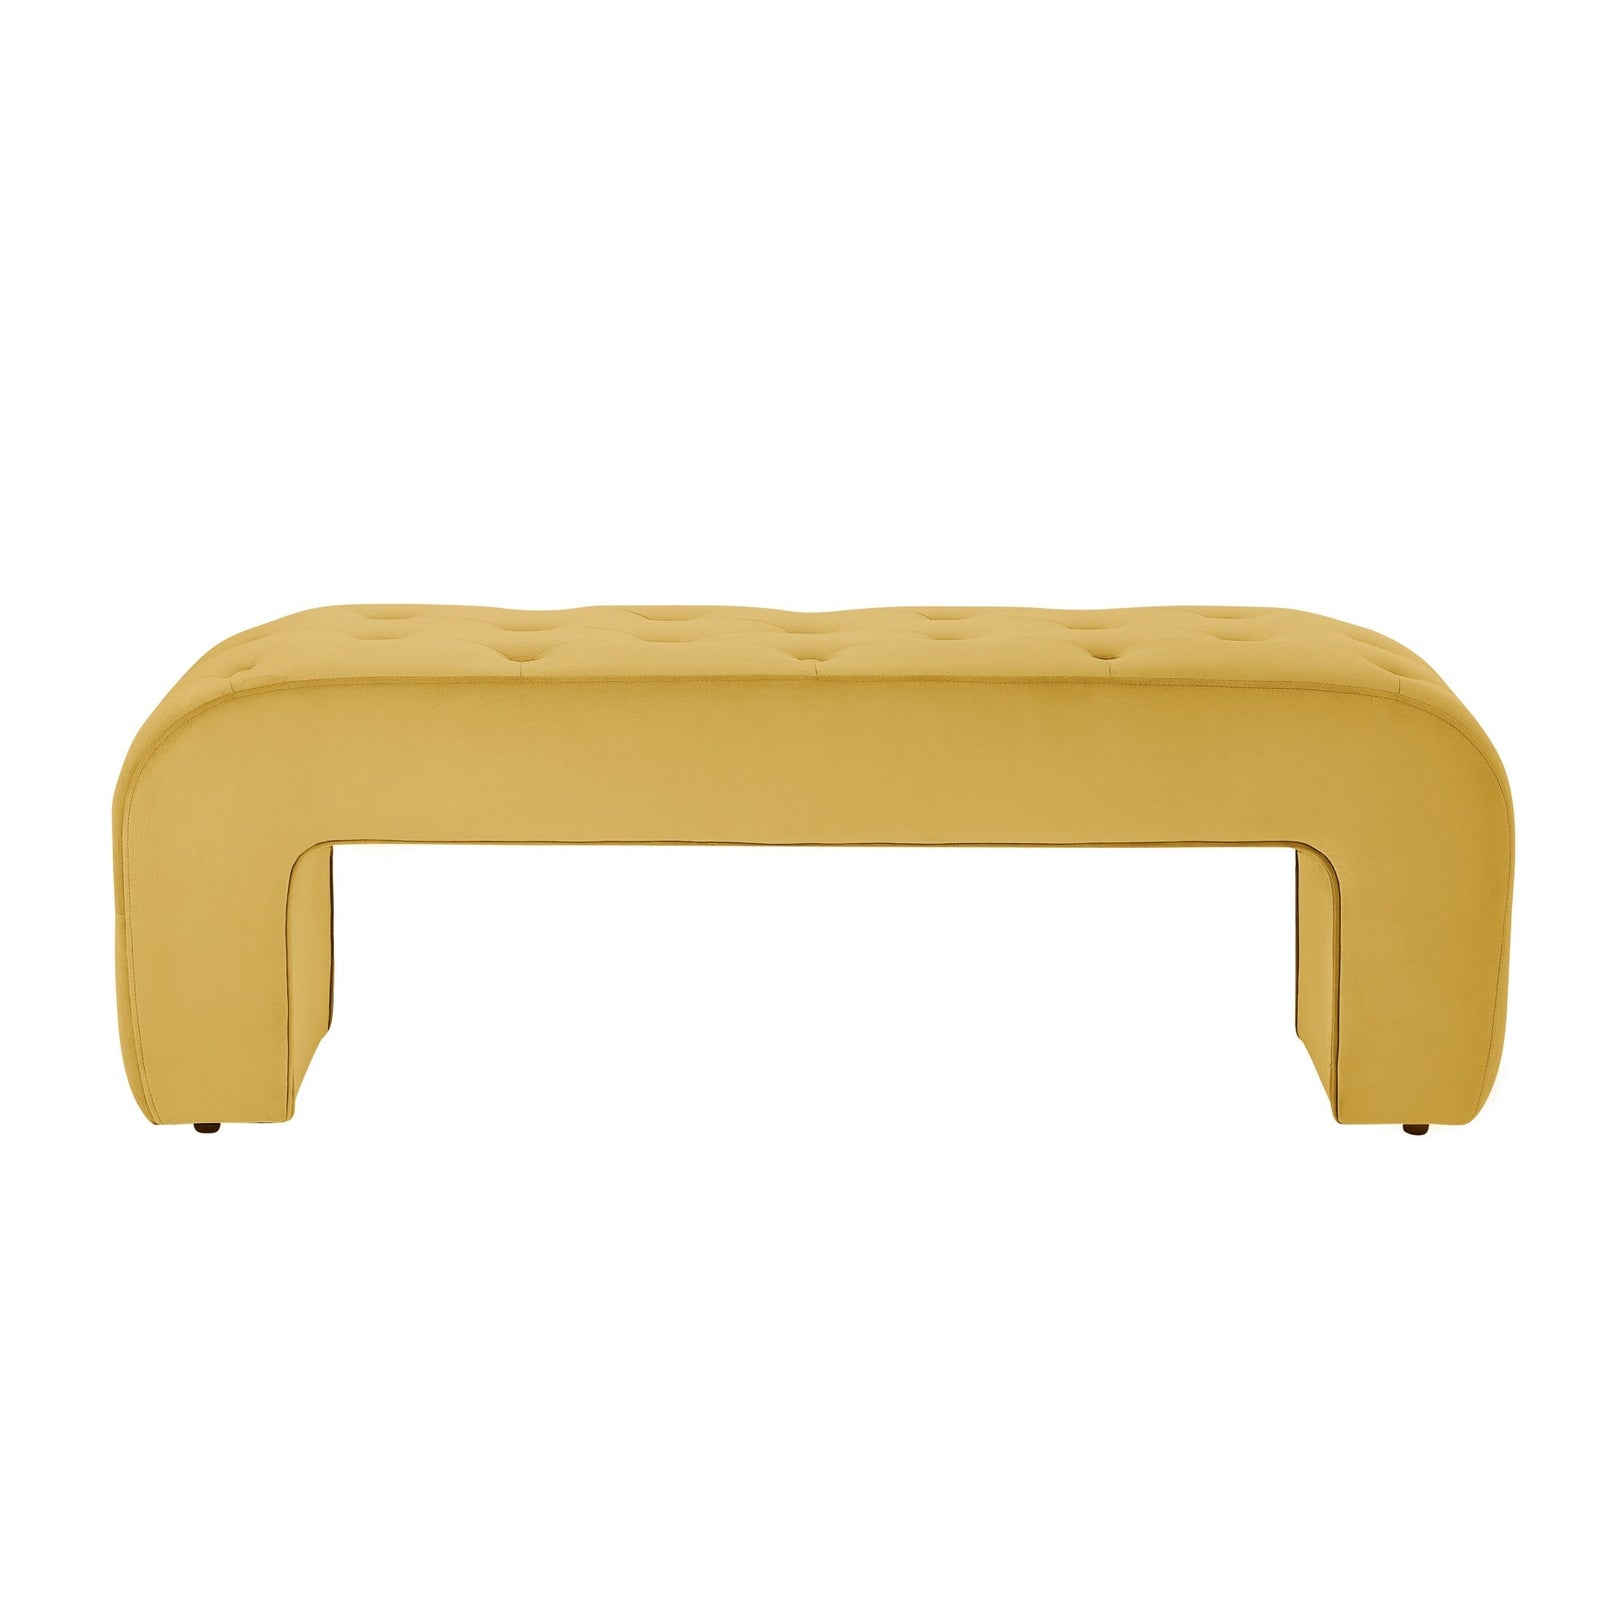 16" Yellow Upholstered Upholstery Bedroom Bench